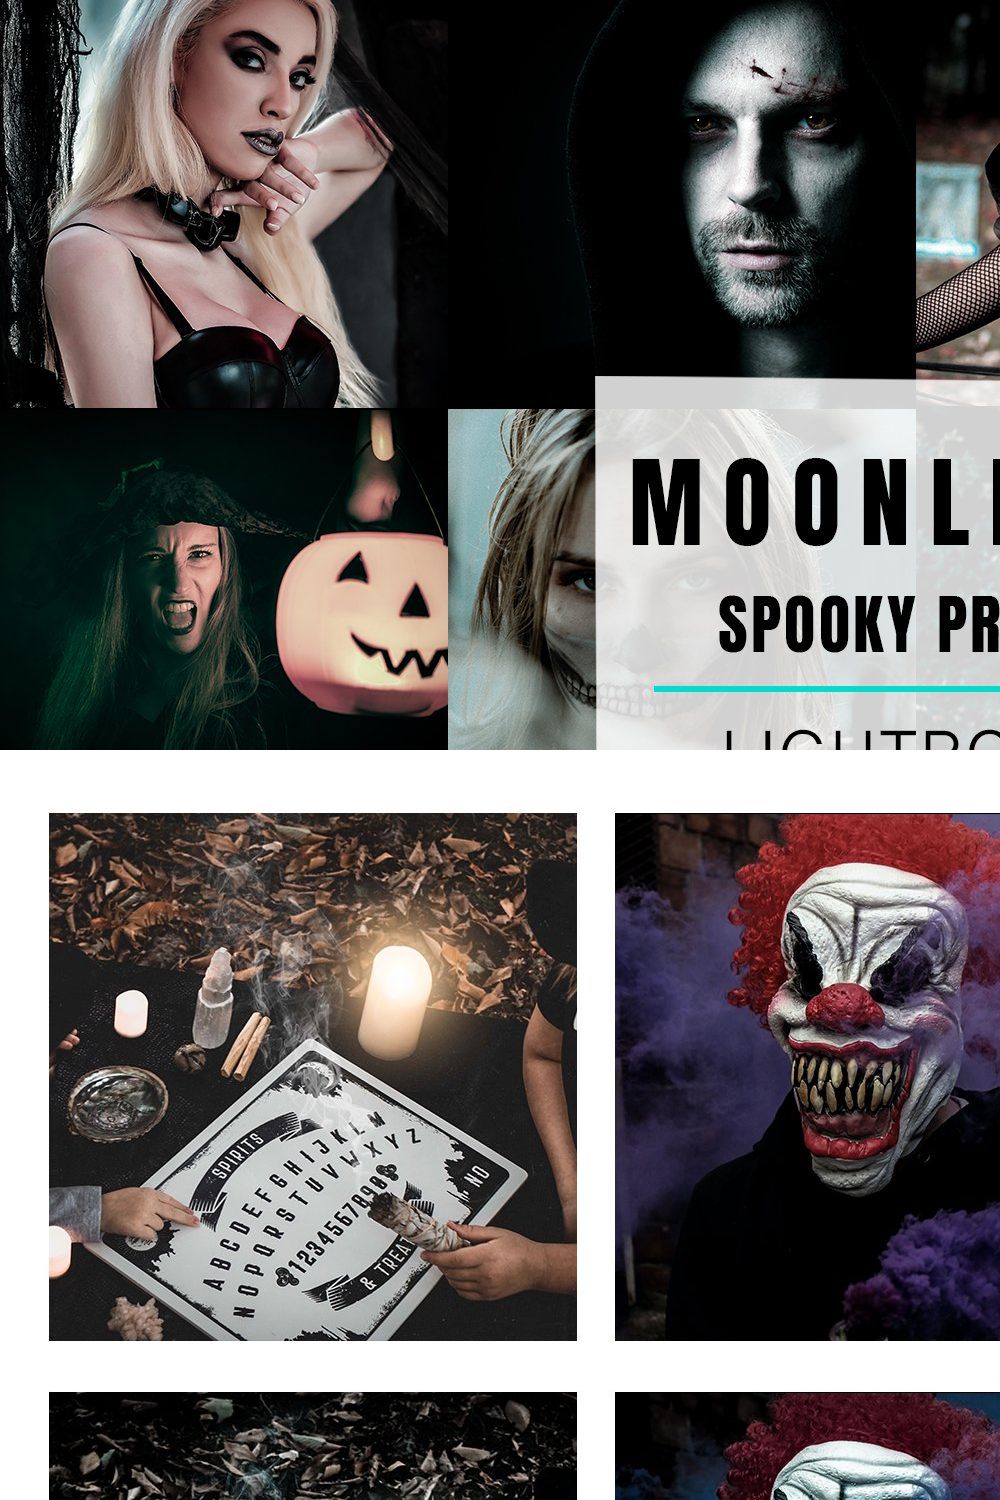 Lightroom Mobile - Spooky Moon Light pinterest preview image.